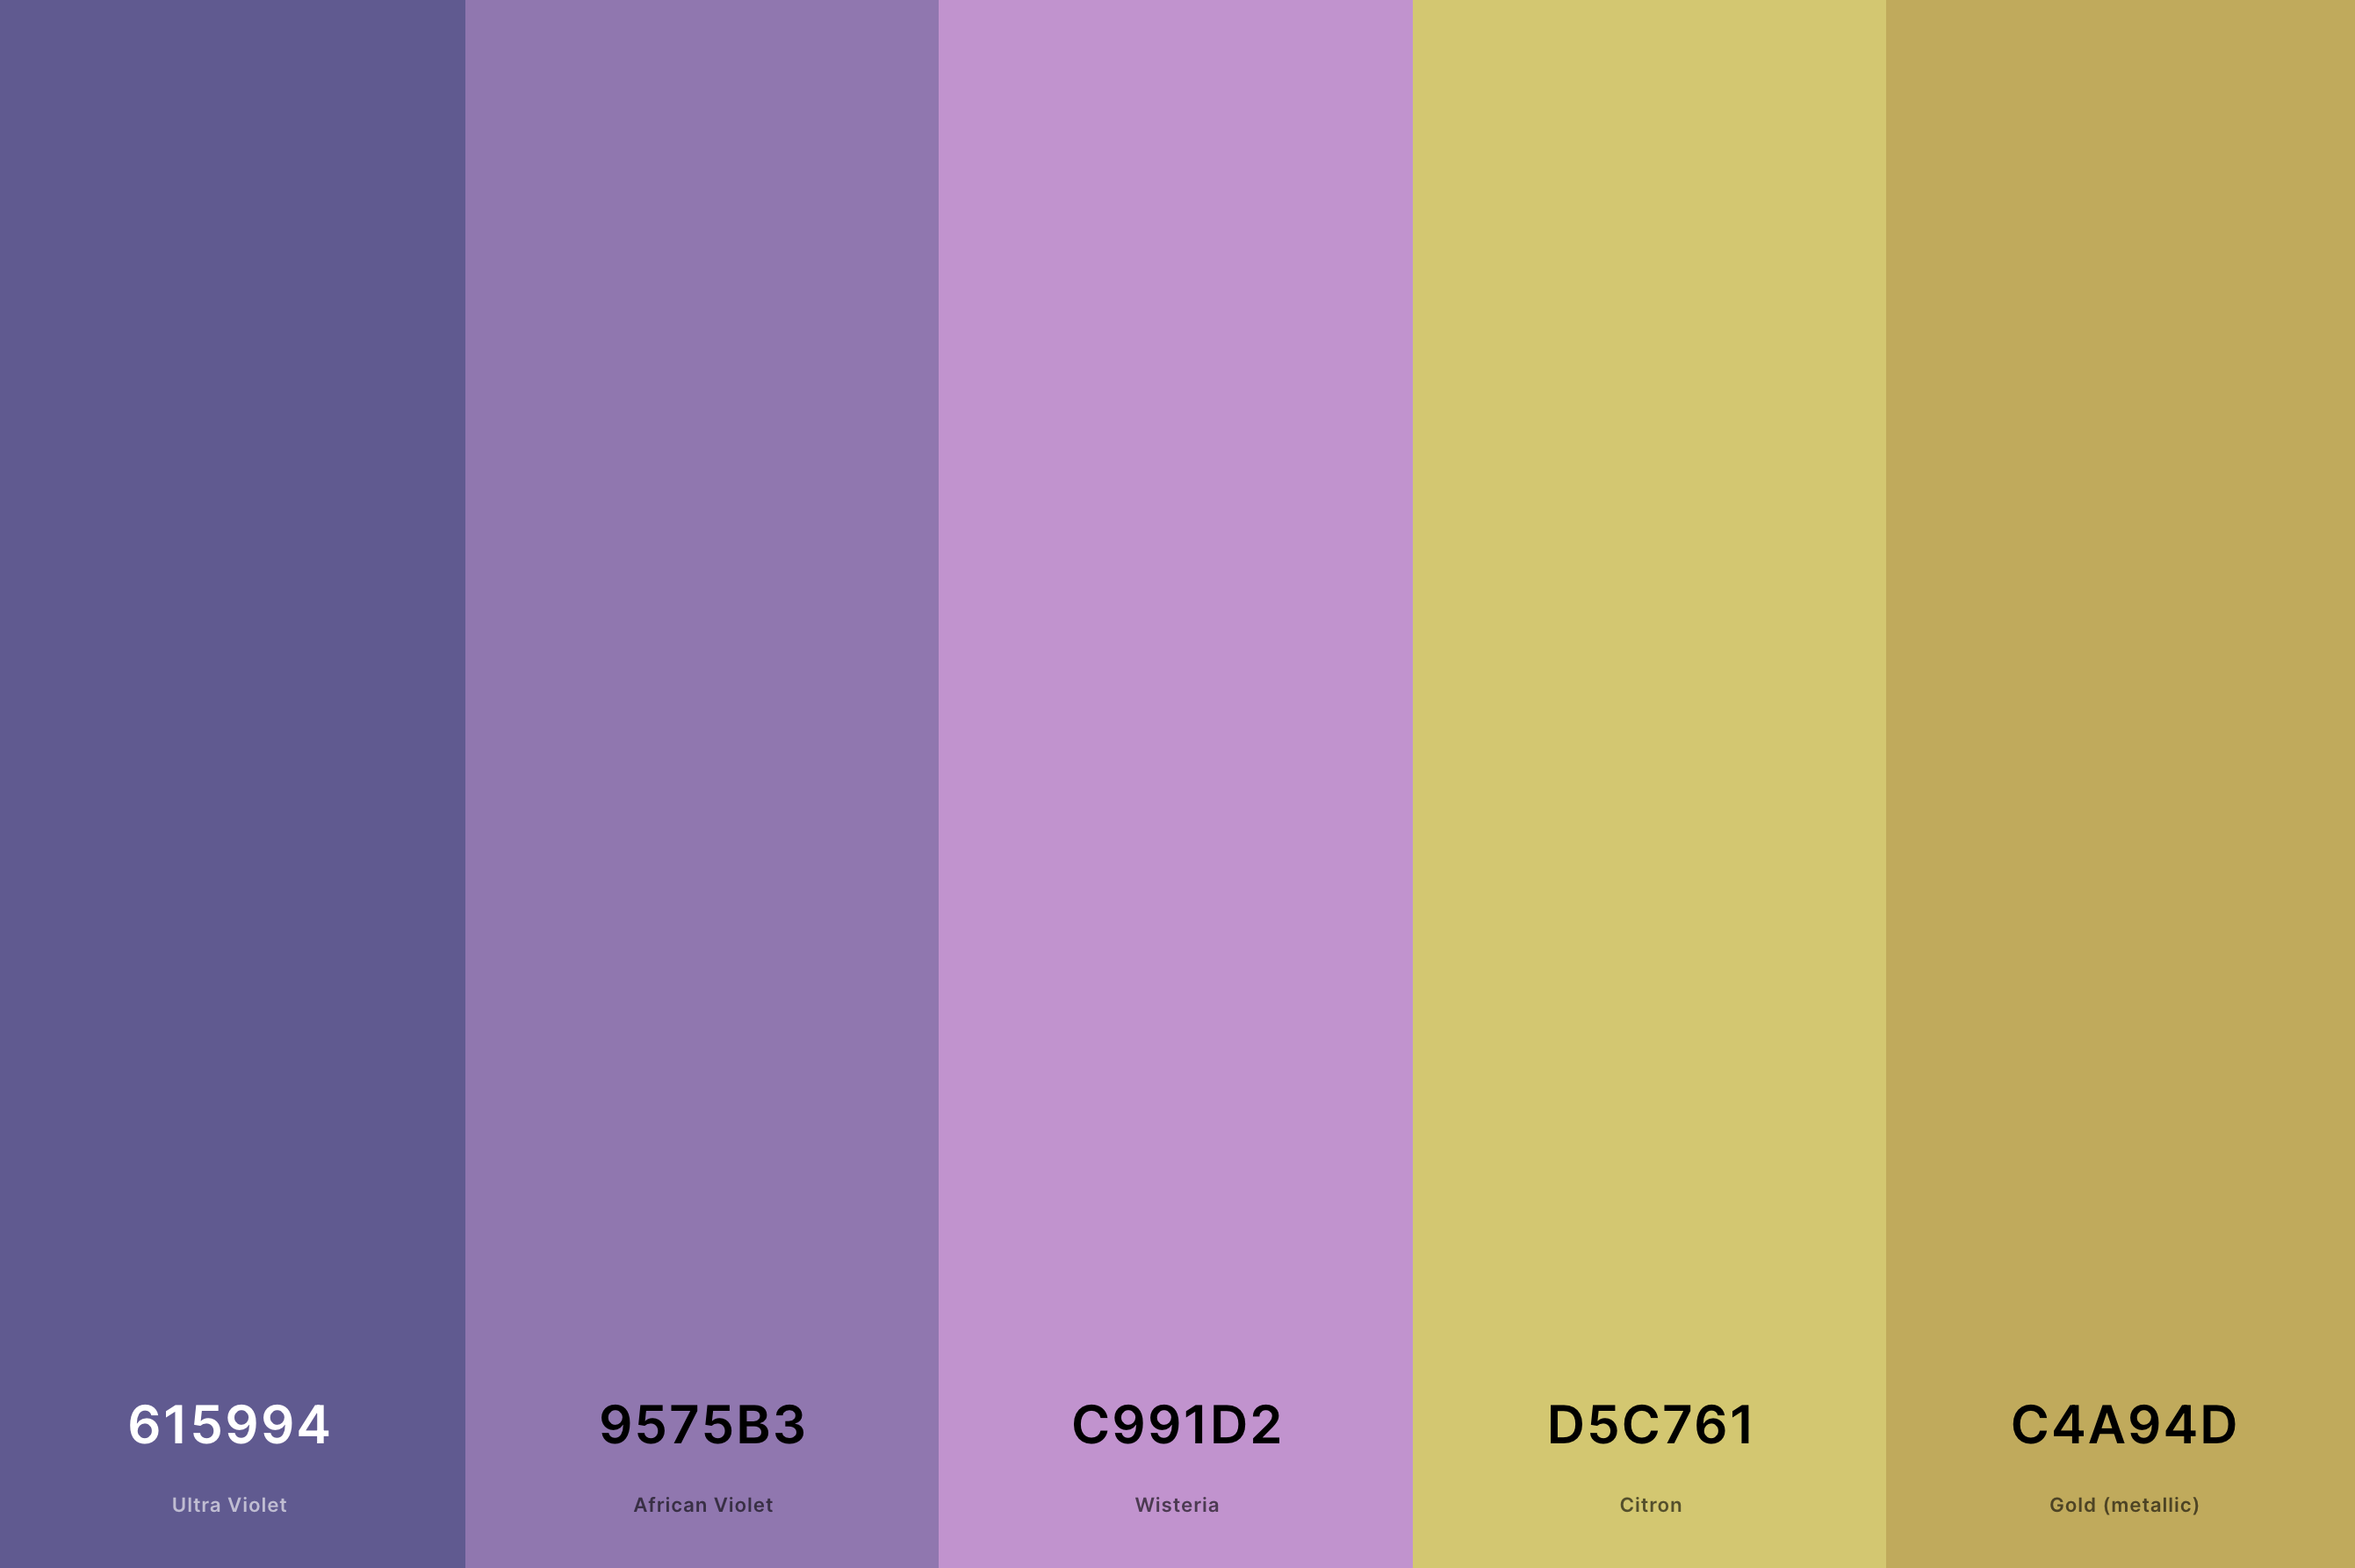 25. Lavender And Gold Color Palette Color Palette with Ultra Violet (Hex #615994) + African Violet (Hex #9575B3) + Wisteria (Hex #C991D2) + Citron (Hex #D5C761) + Gold (Metallic) (Hex #C4A94D) Color Palette with Hex Codes